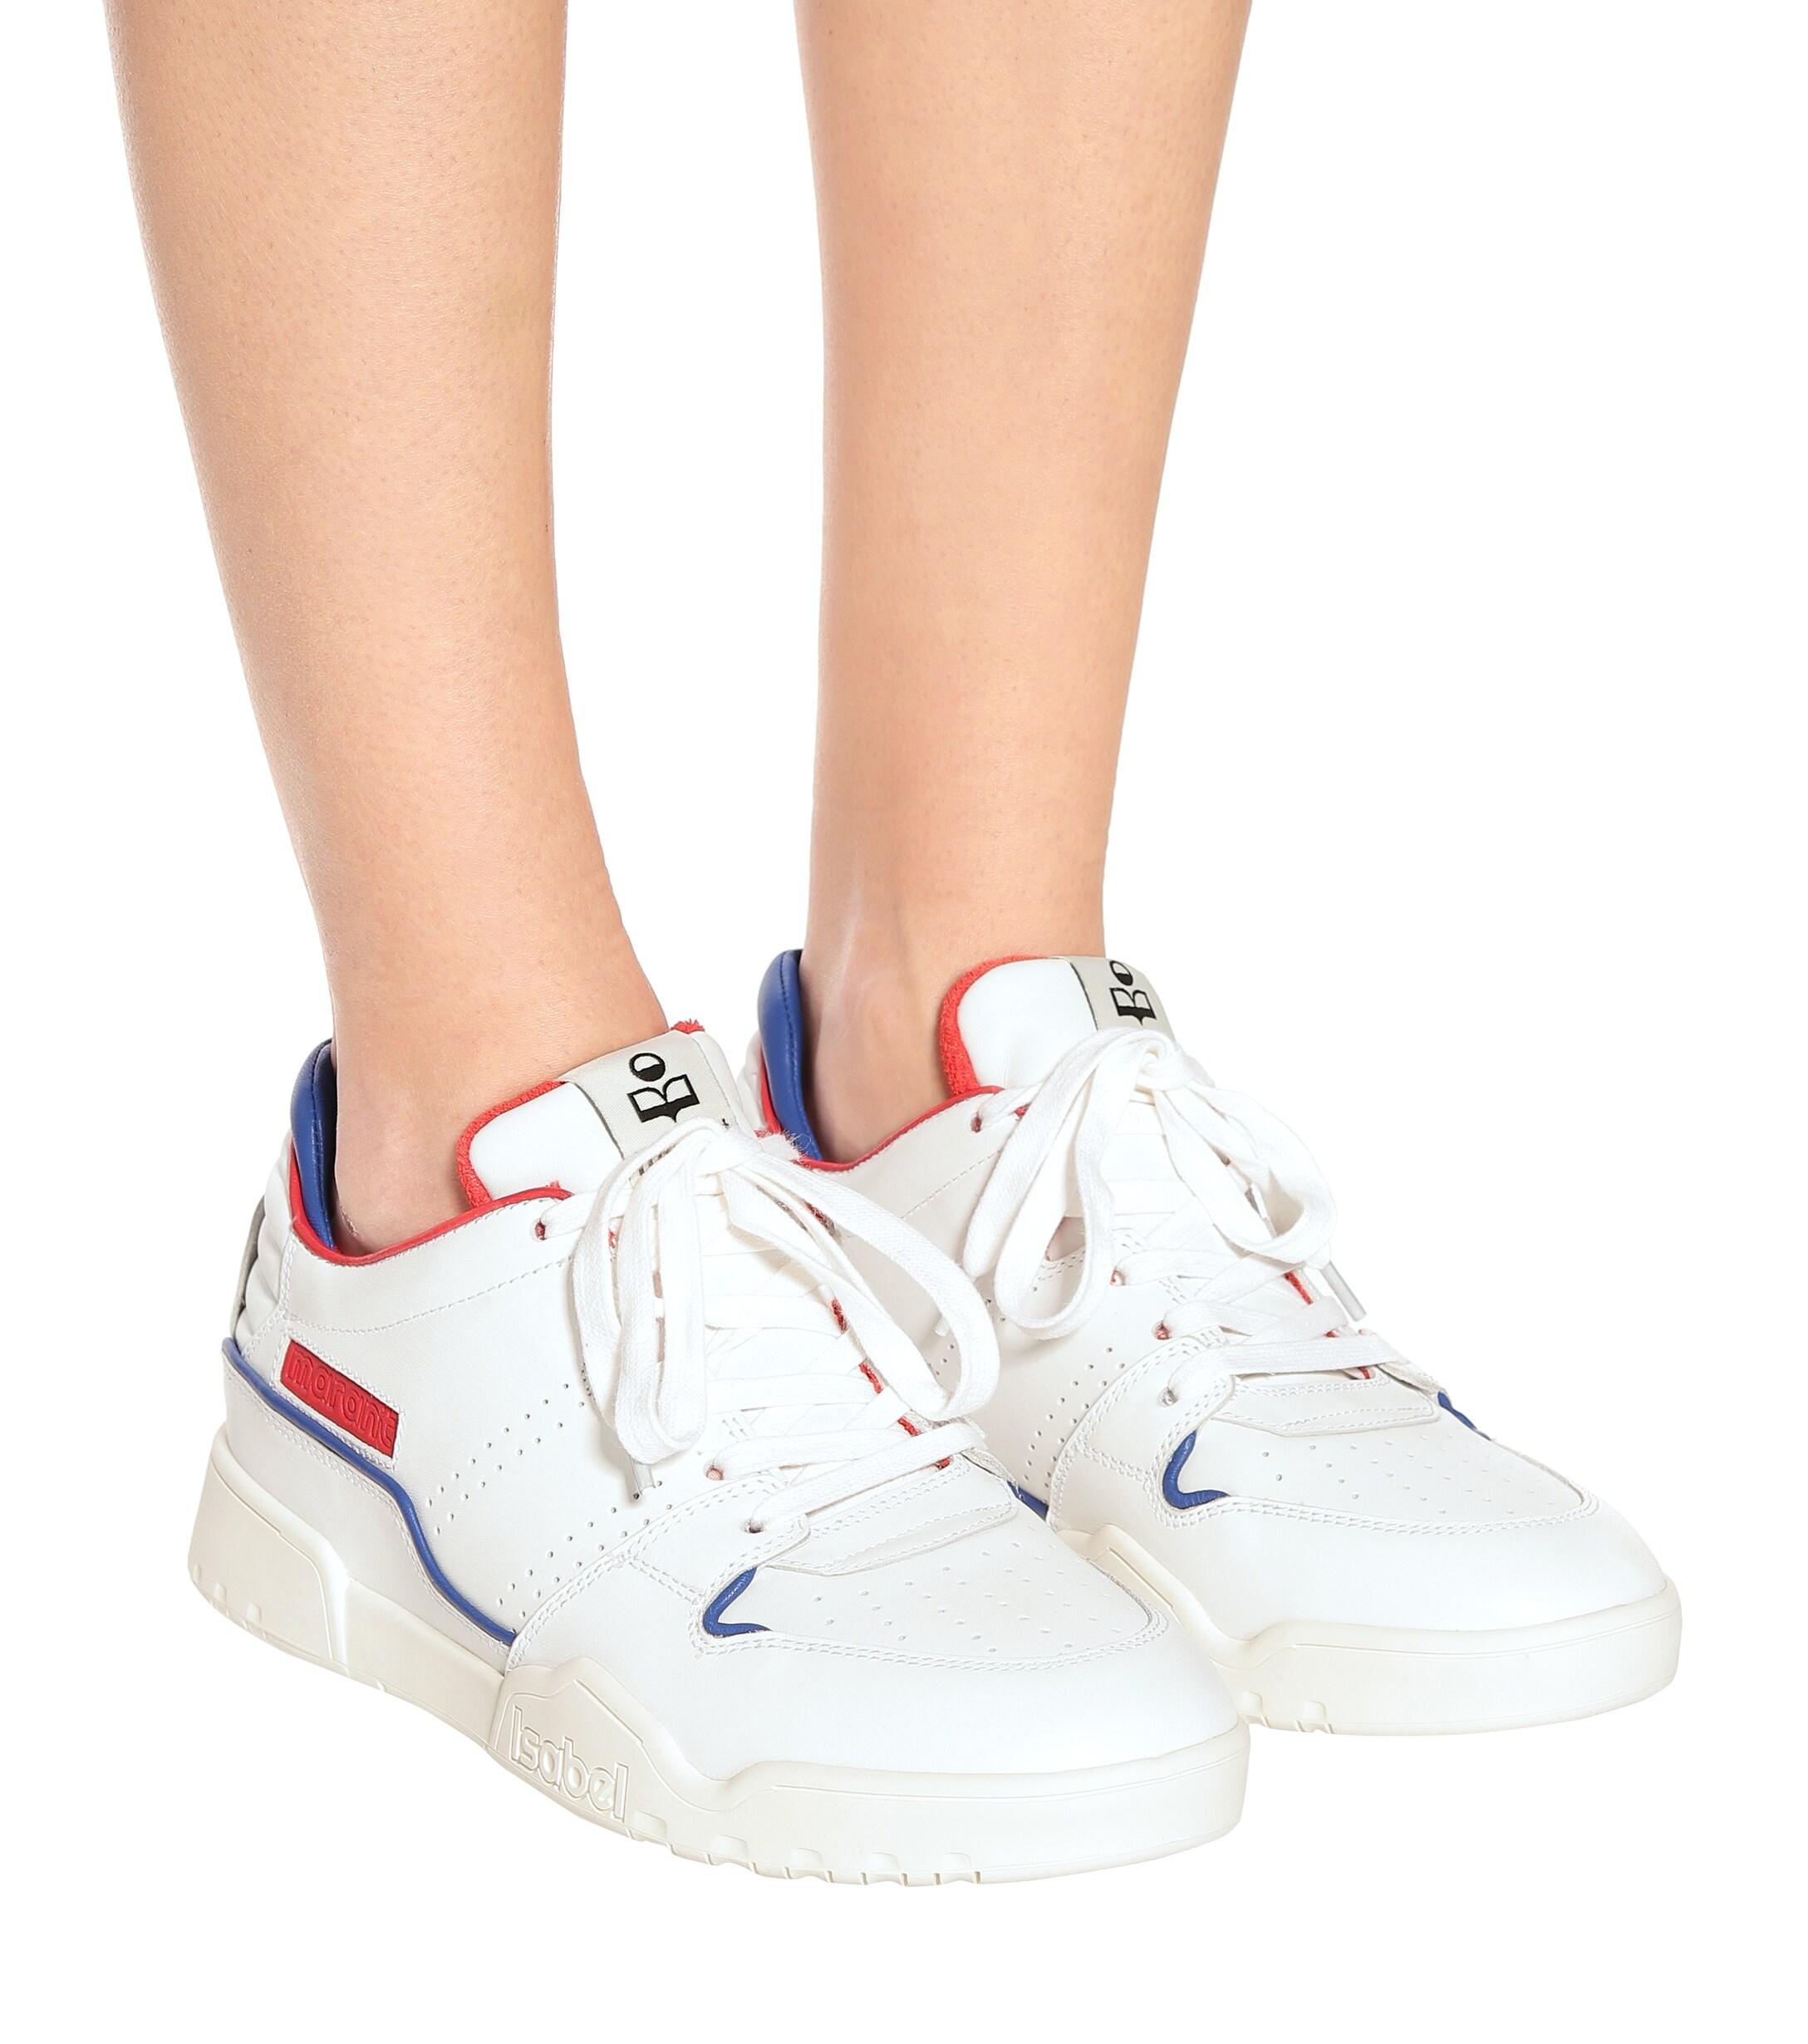 Recollection indsigelse uregelmæssig Isabel Marant Emree Low-top Leather Sneakers in White | Lyst